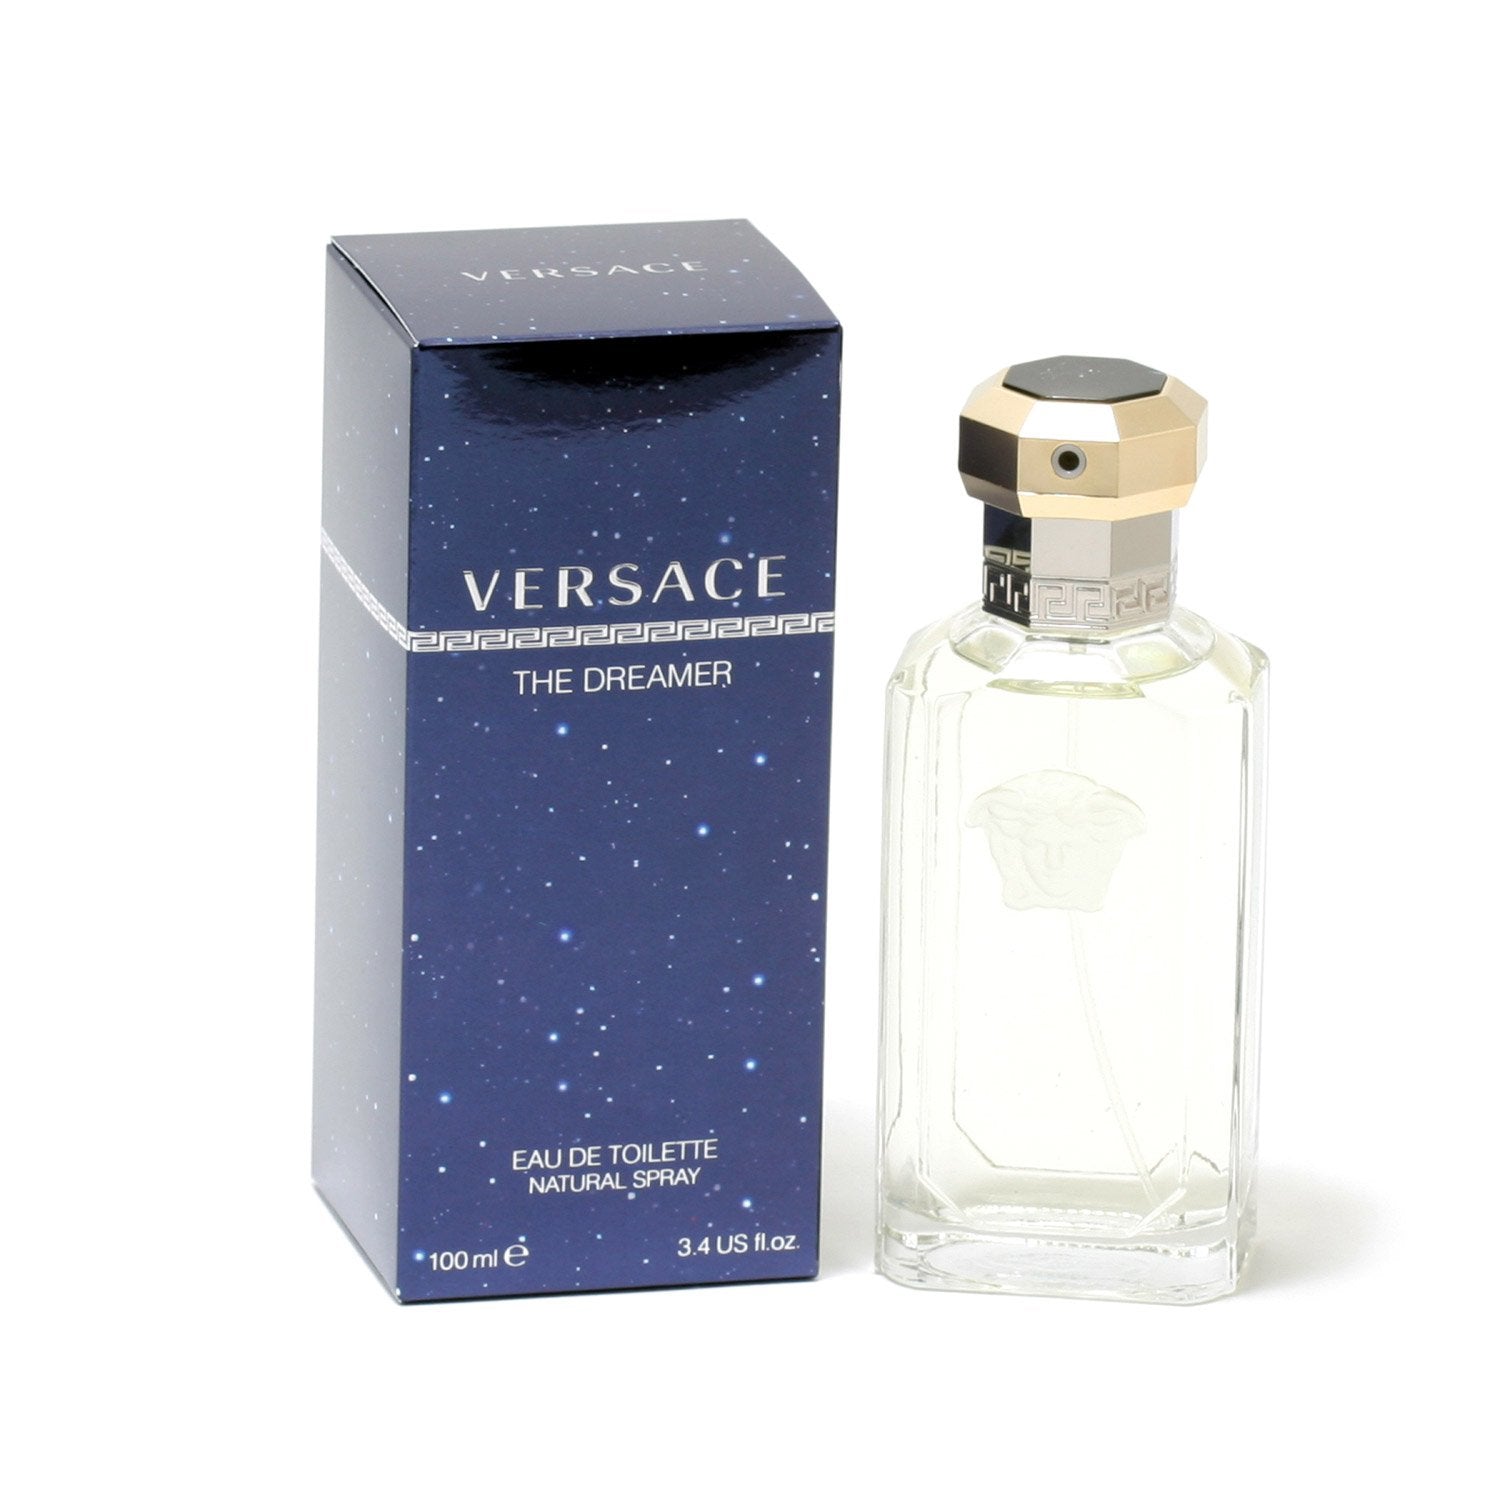 Versace - The Perfume Society